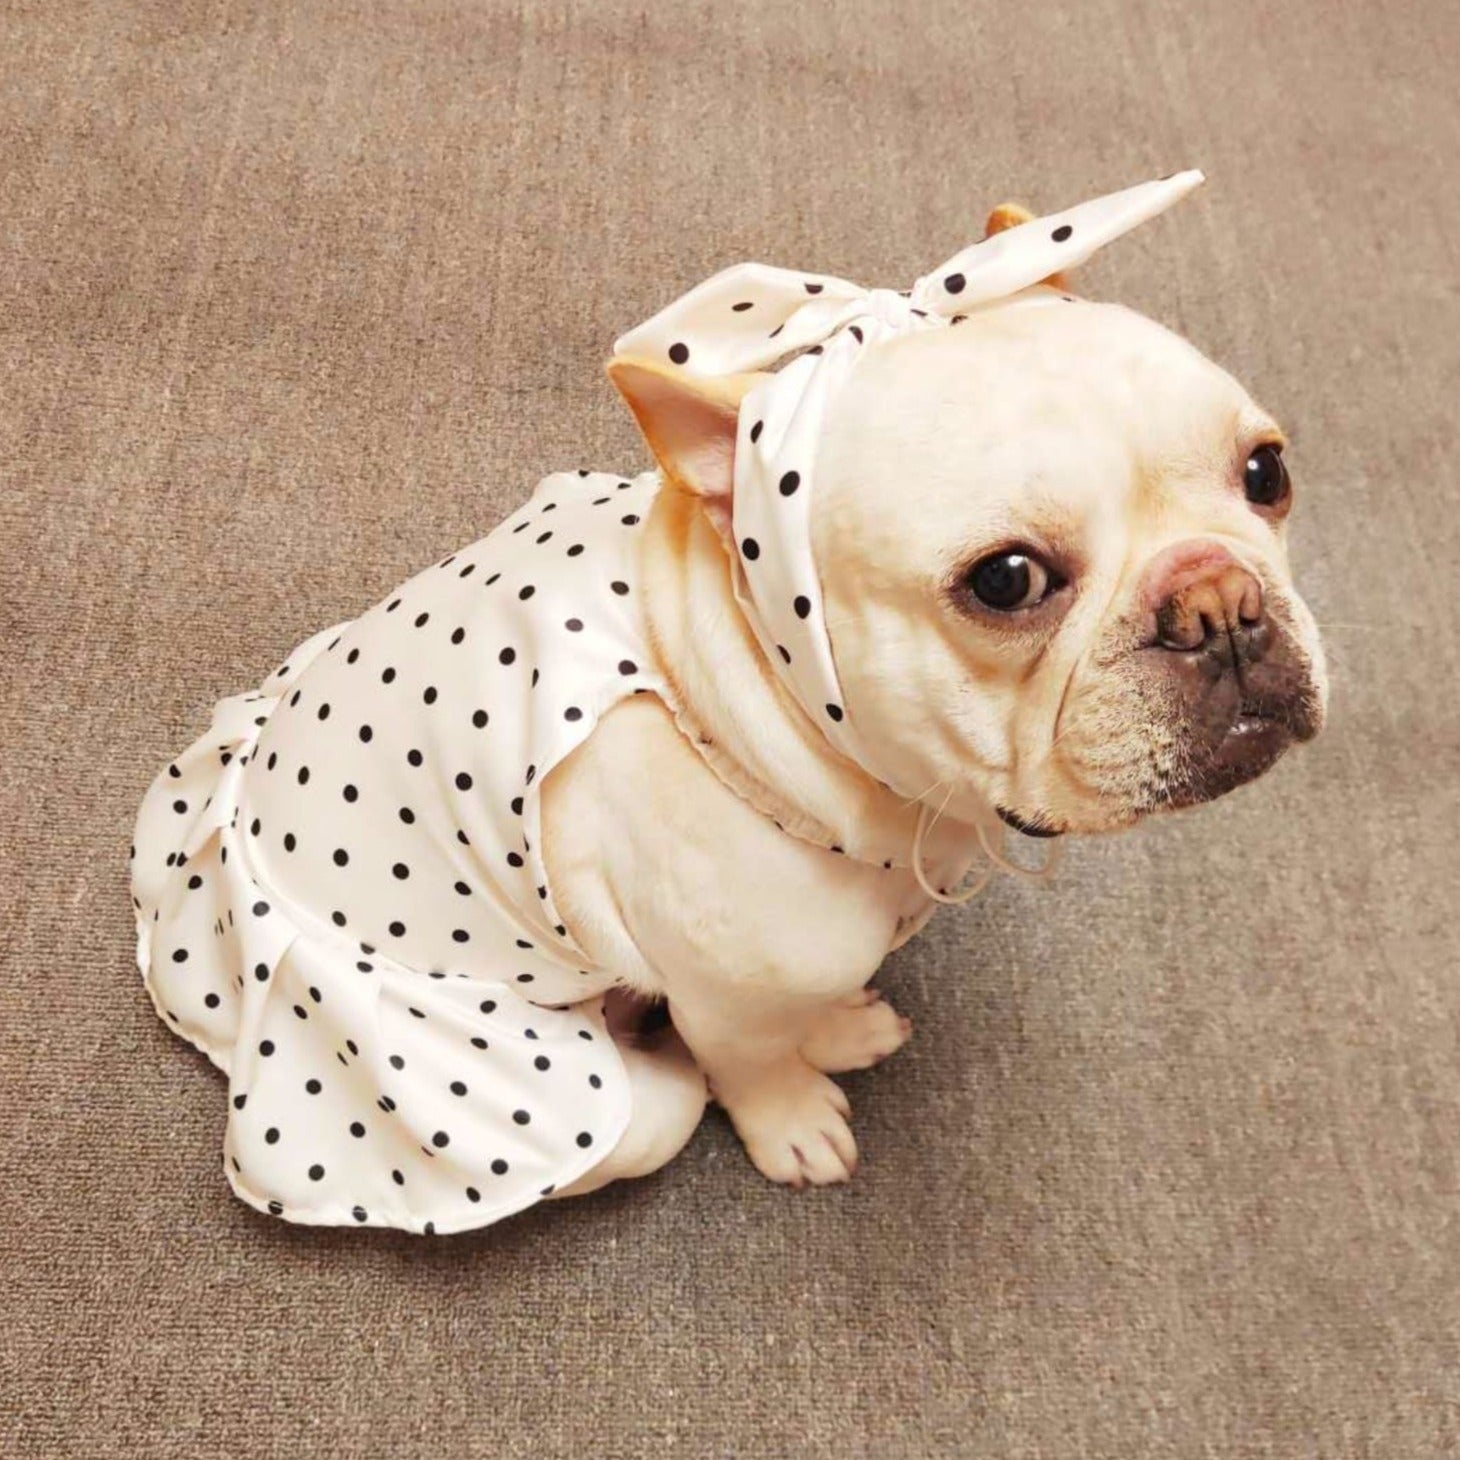 Dog White Polka Dot Dress with Headband - Frenchiely